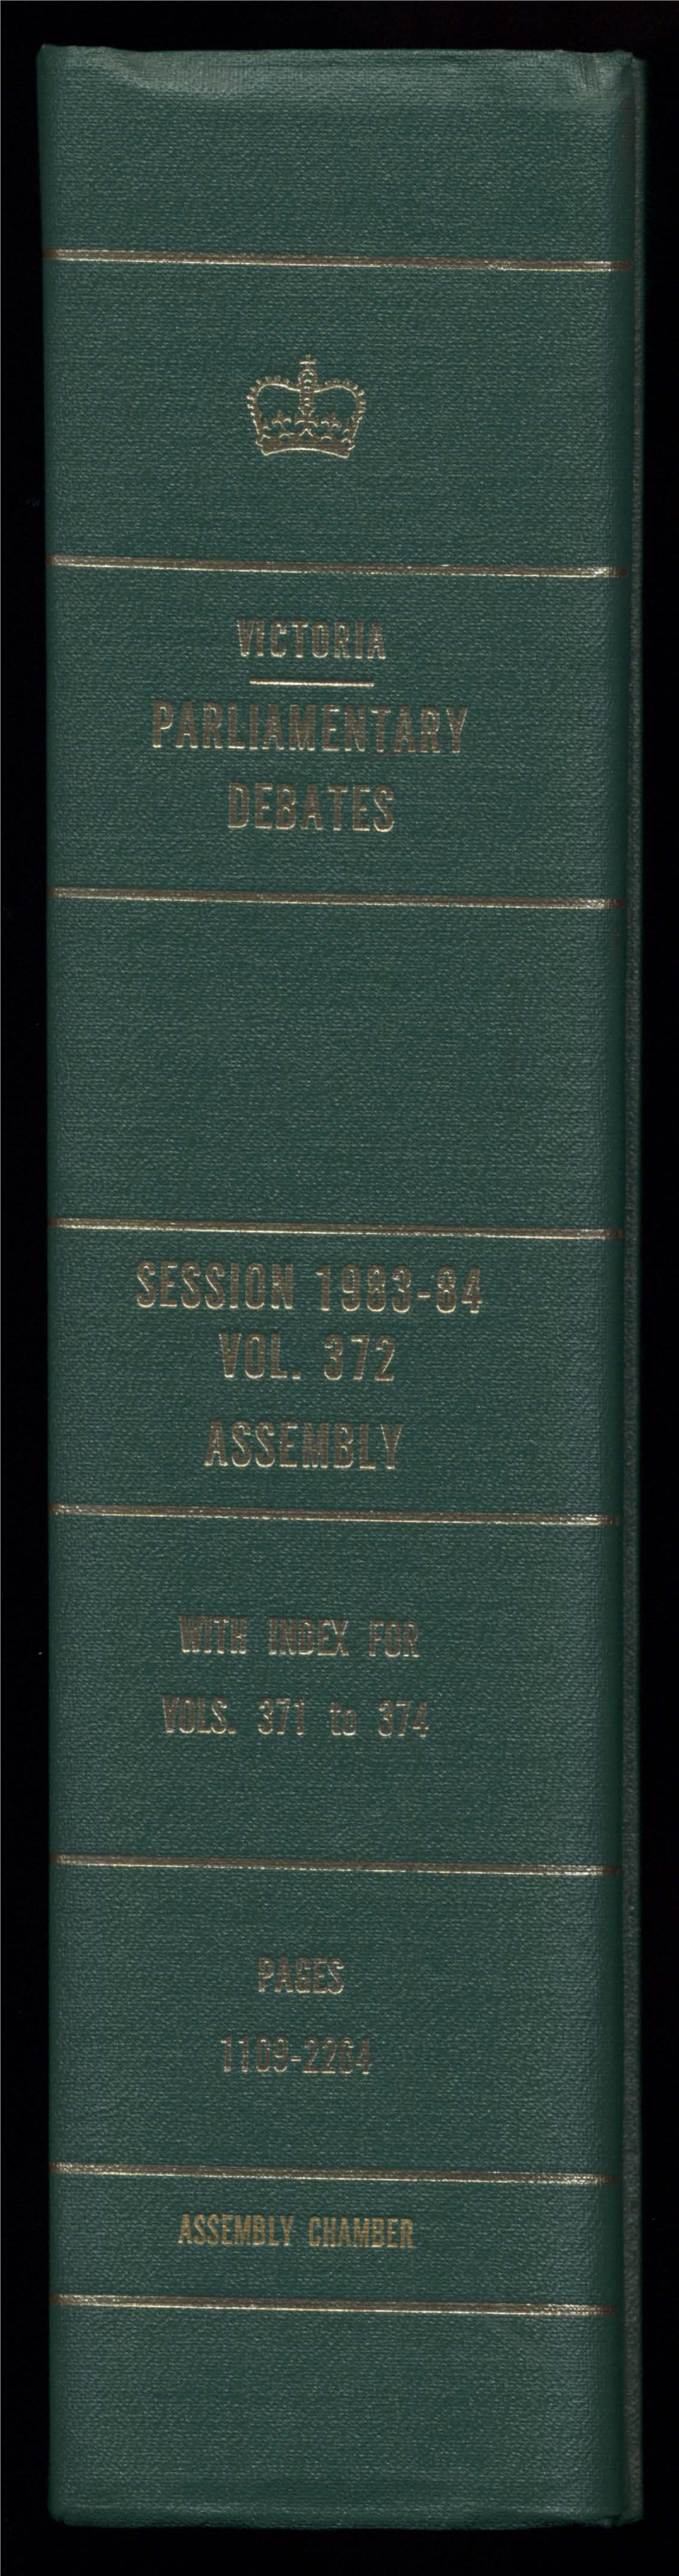 18 October 1983 ASSEMBLY 1109